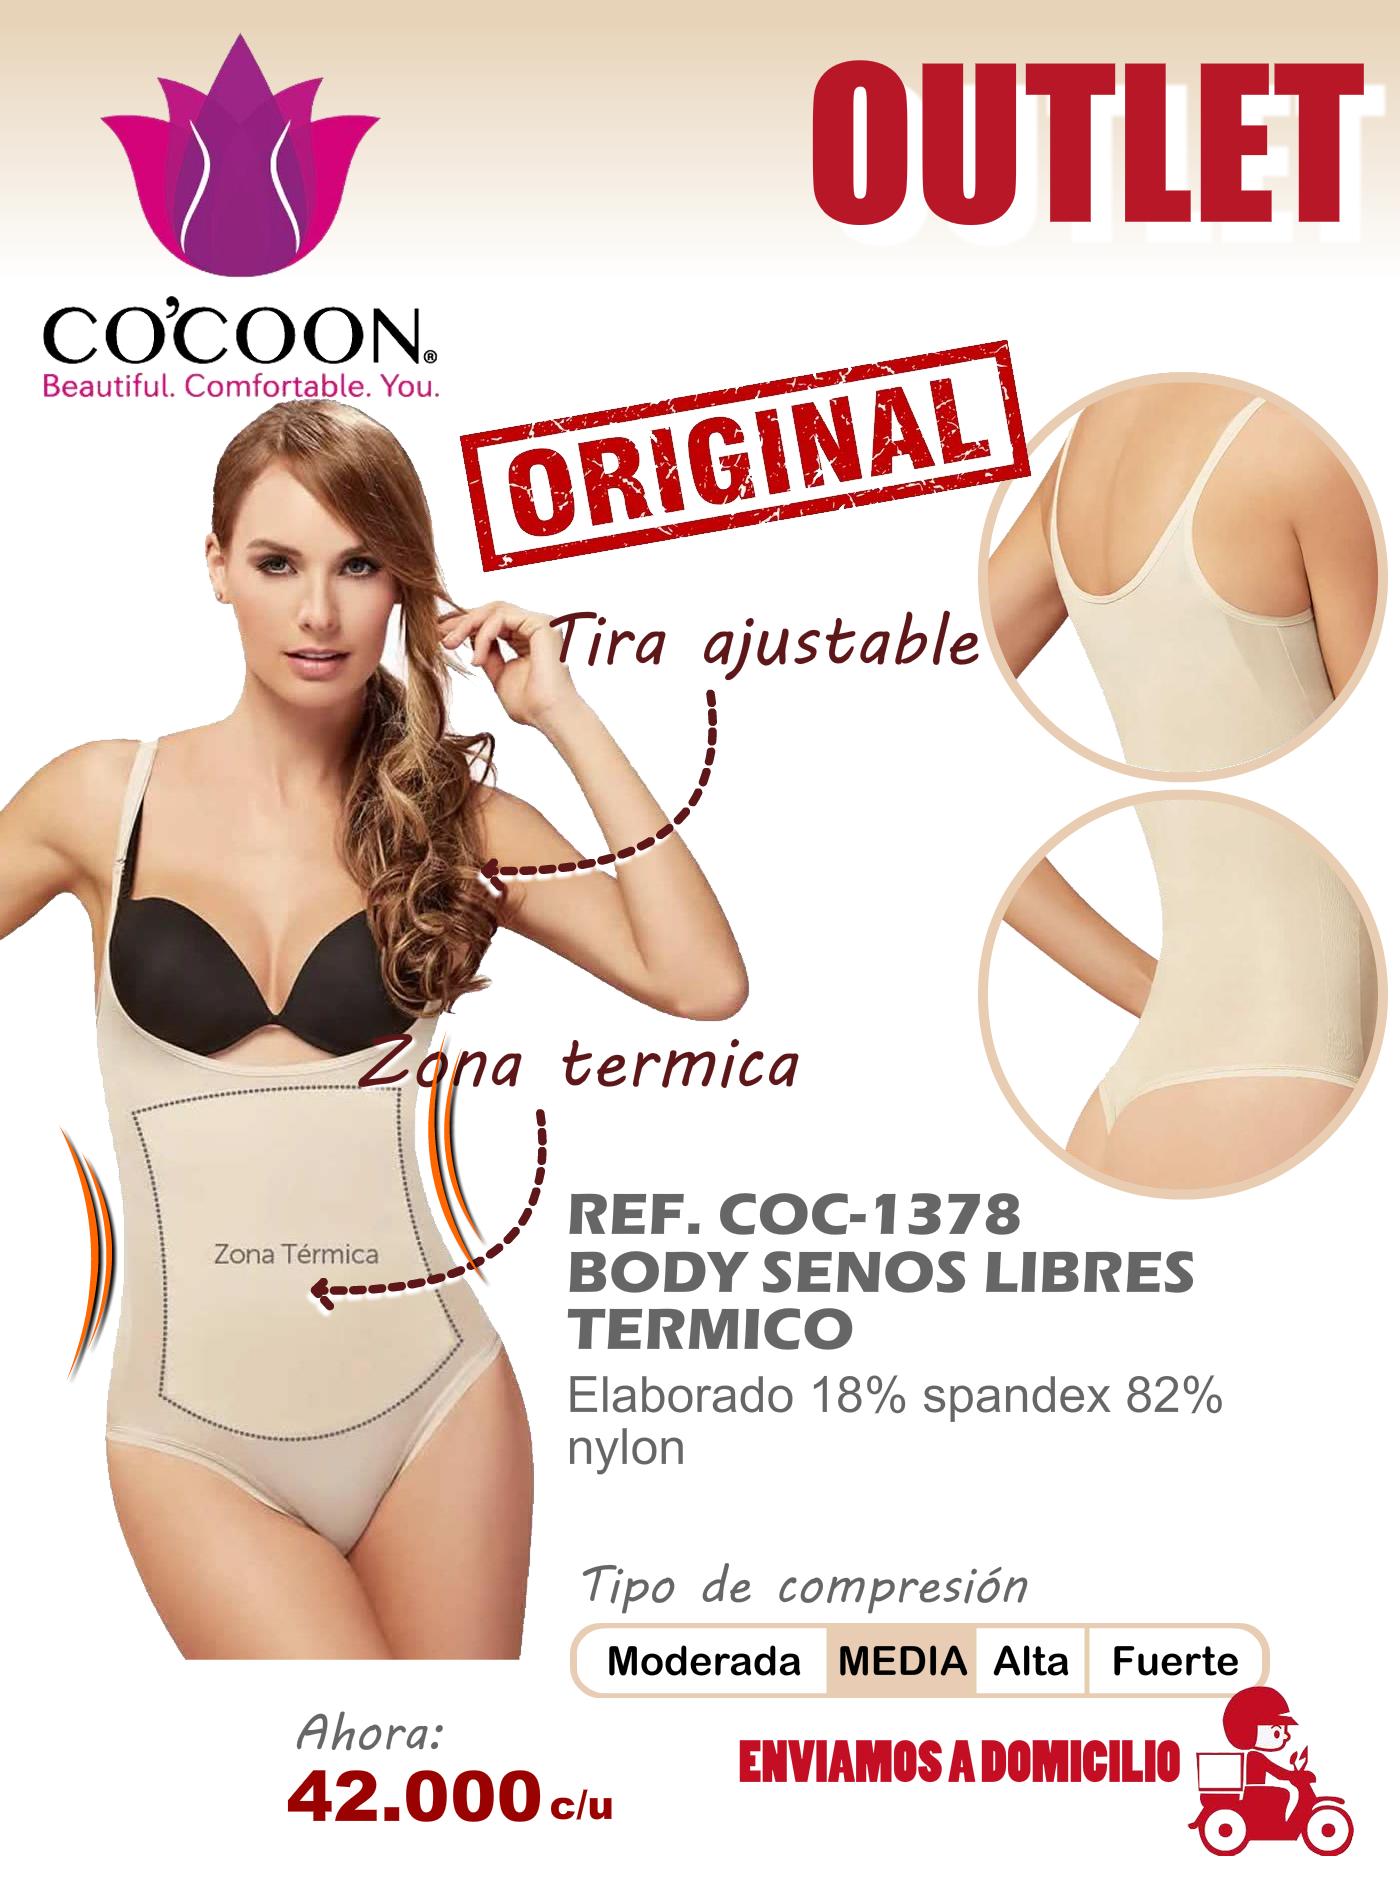 body senos libres termico original cocoon